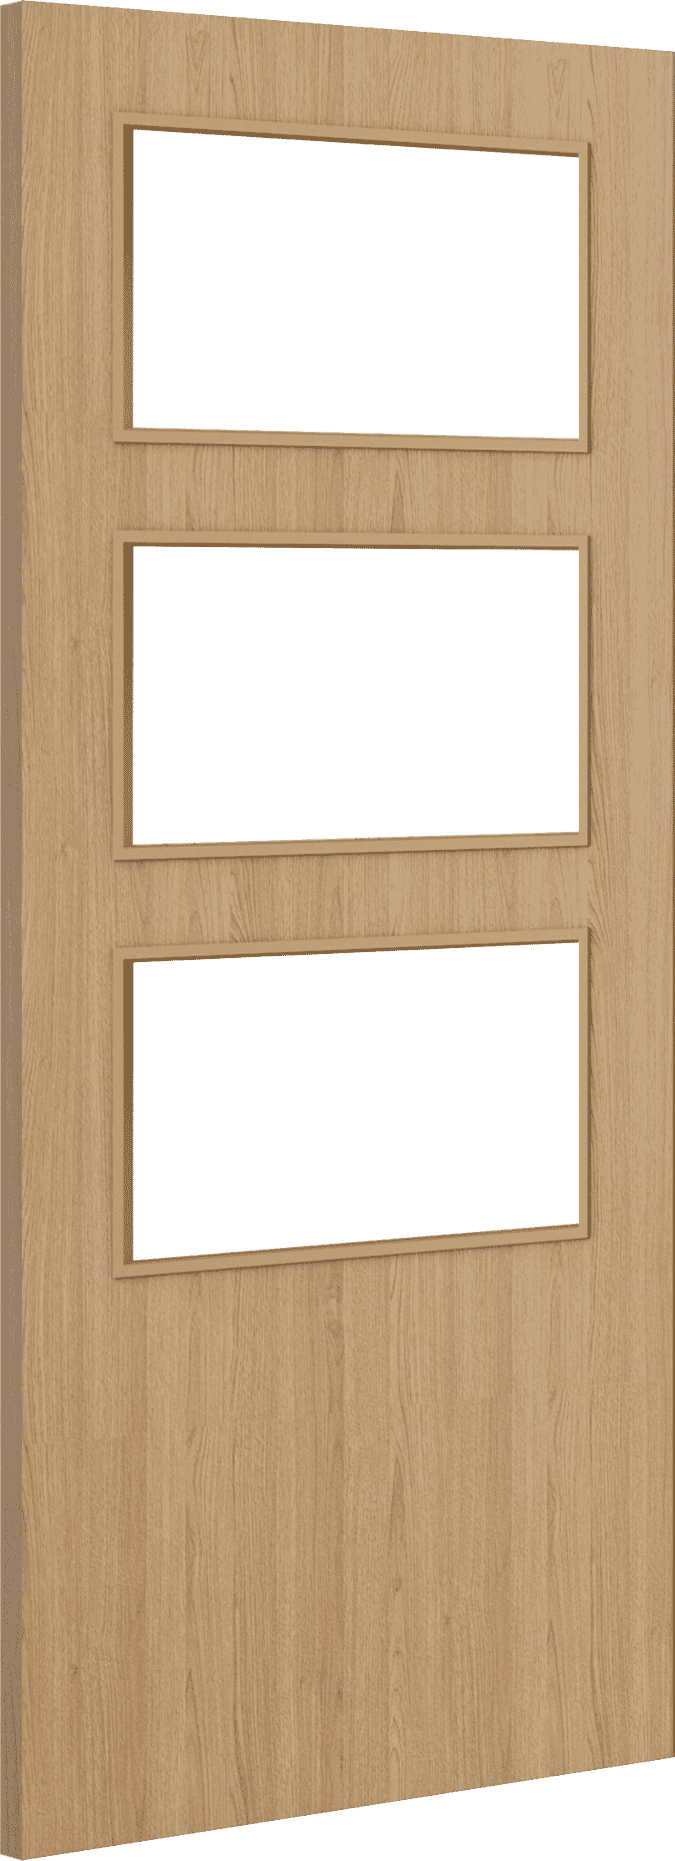 2040mm x 926mm x 44mm Architectural Oak 03 Frosted Glazed - Prefinished FD30 Fire Door Blank